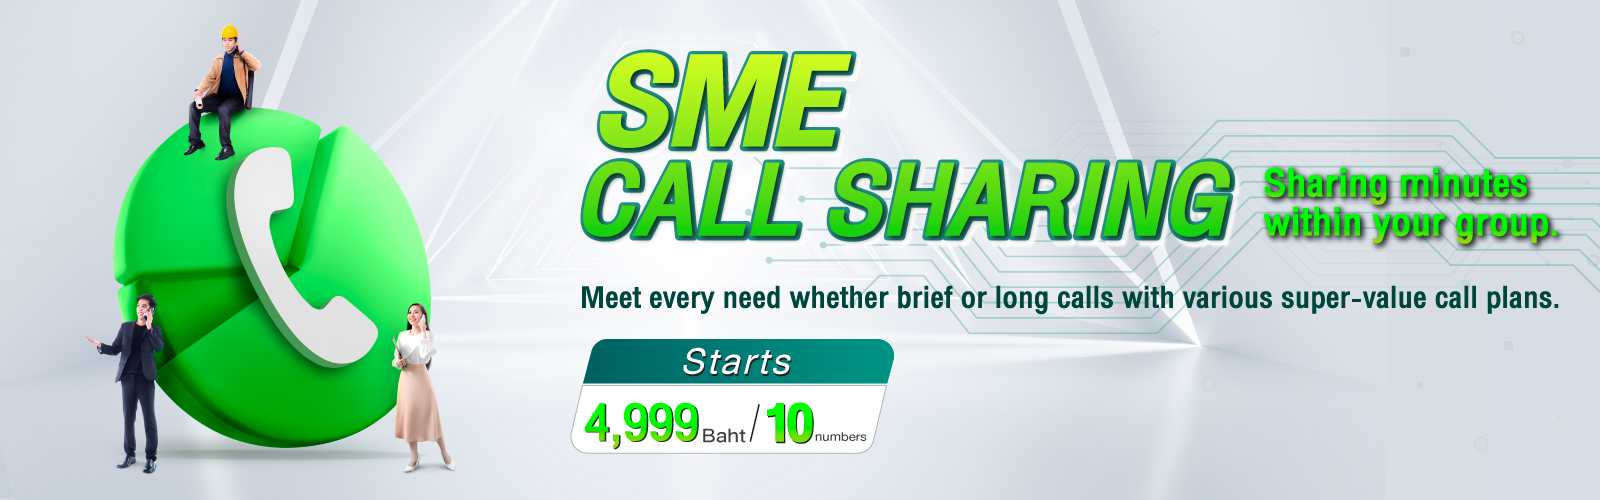 SME Call Sharing